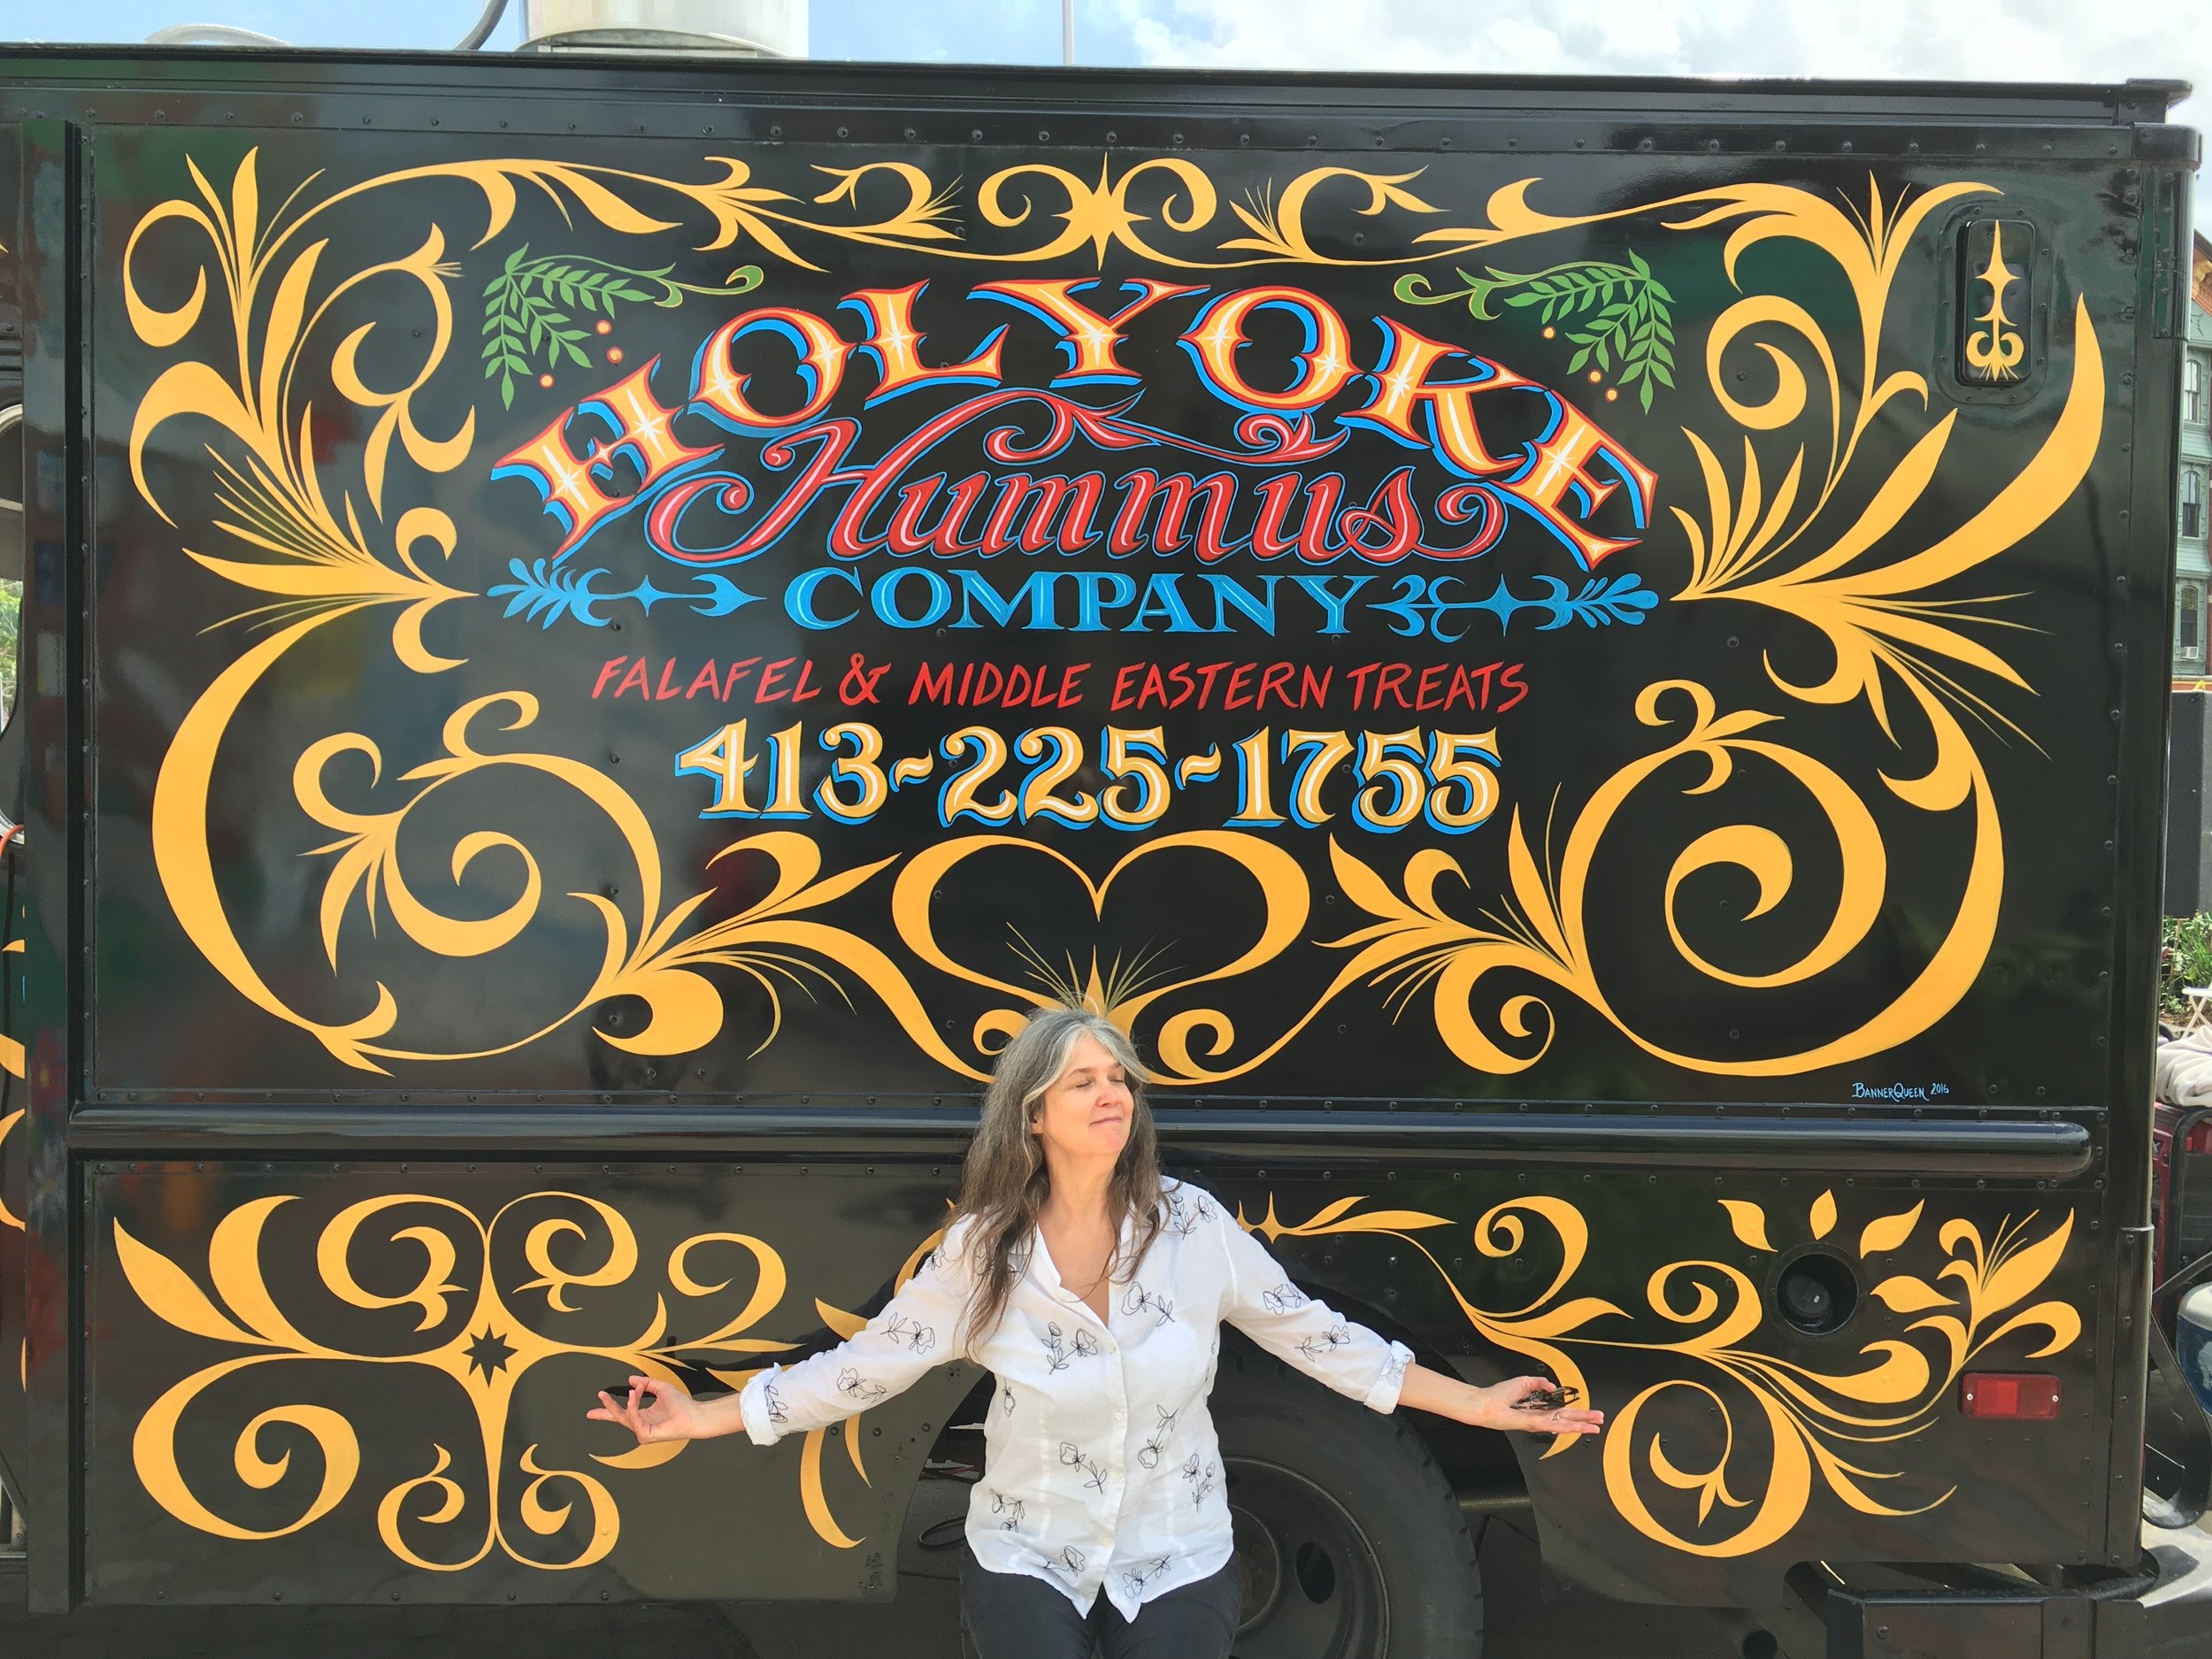 Holyoke Hummus Food Truck